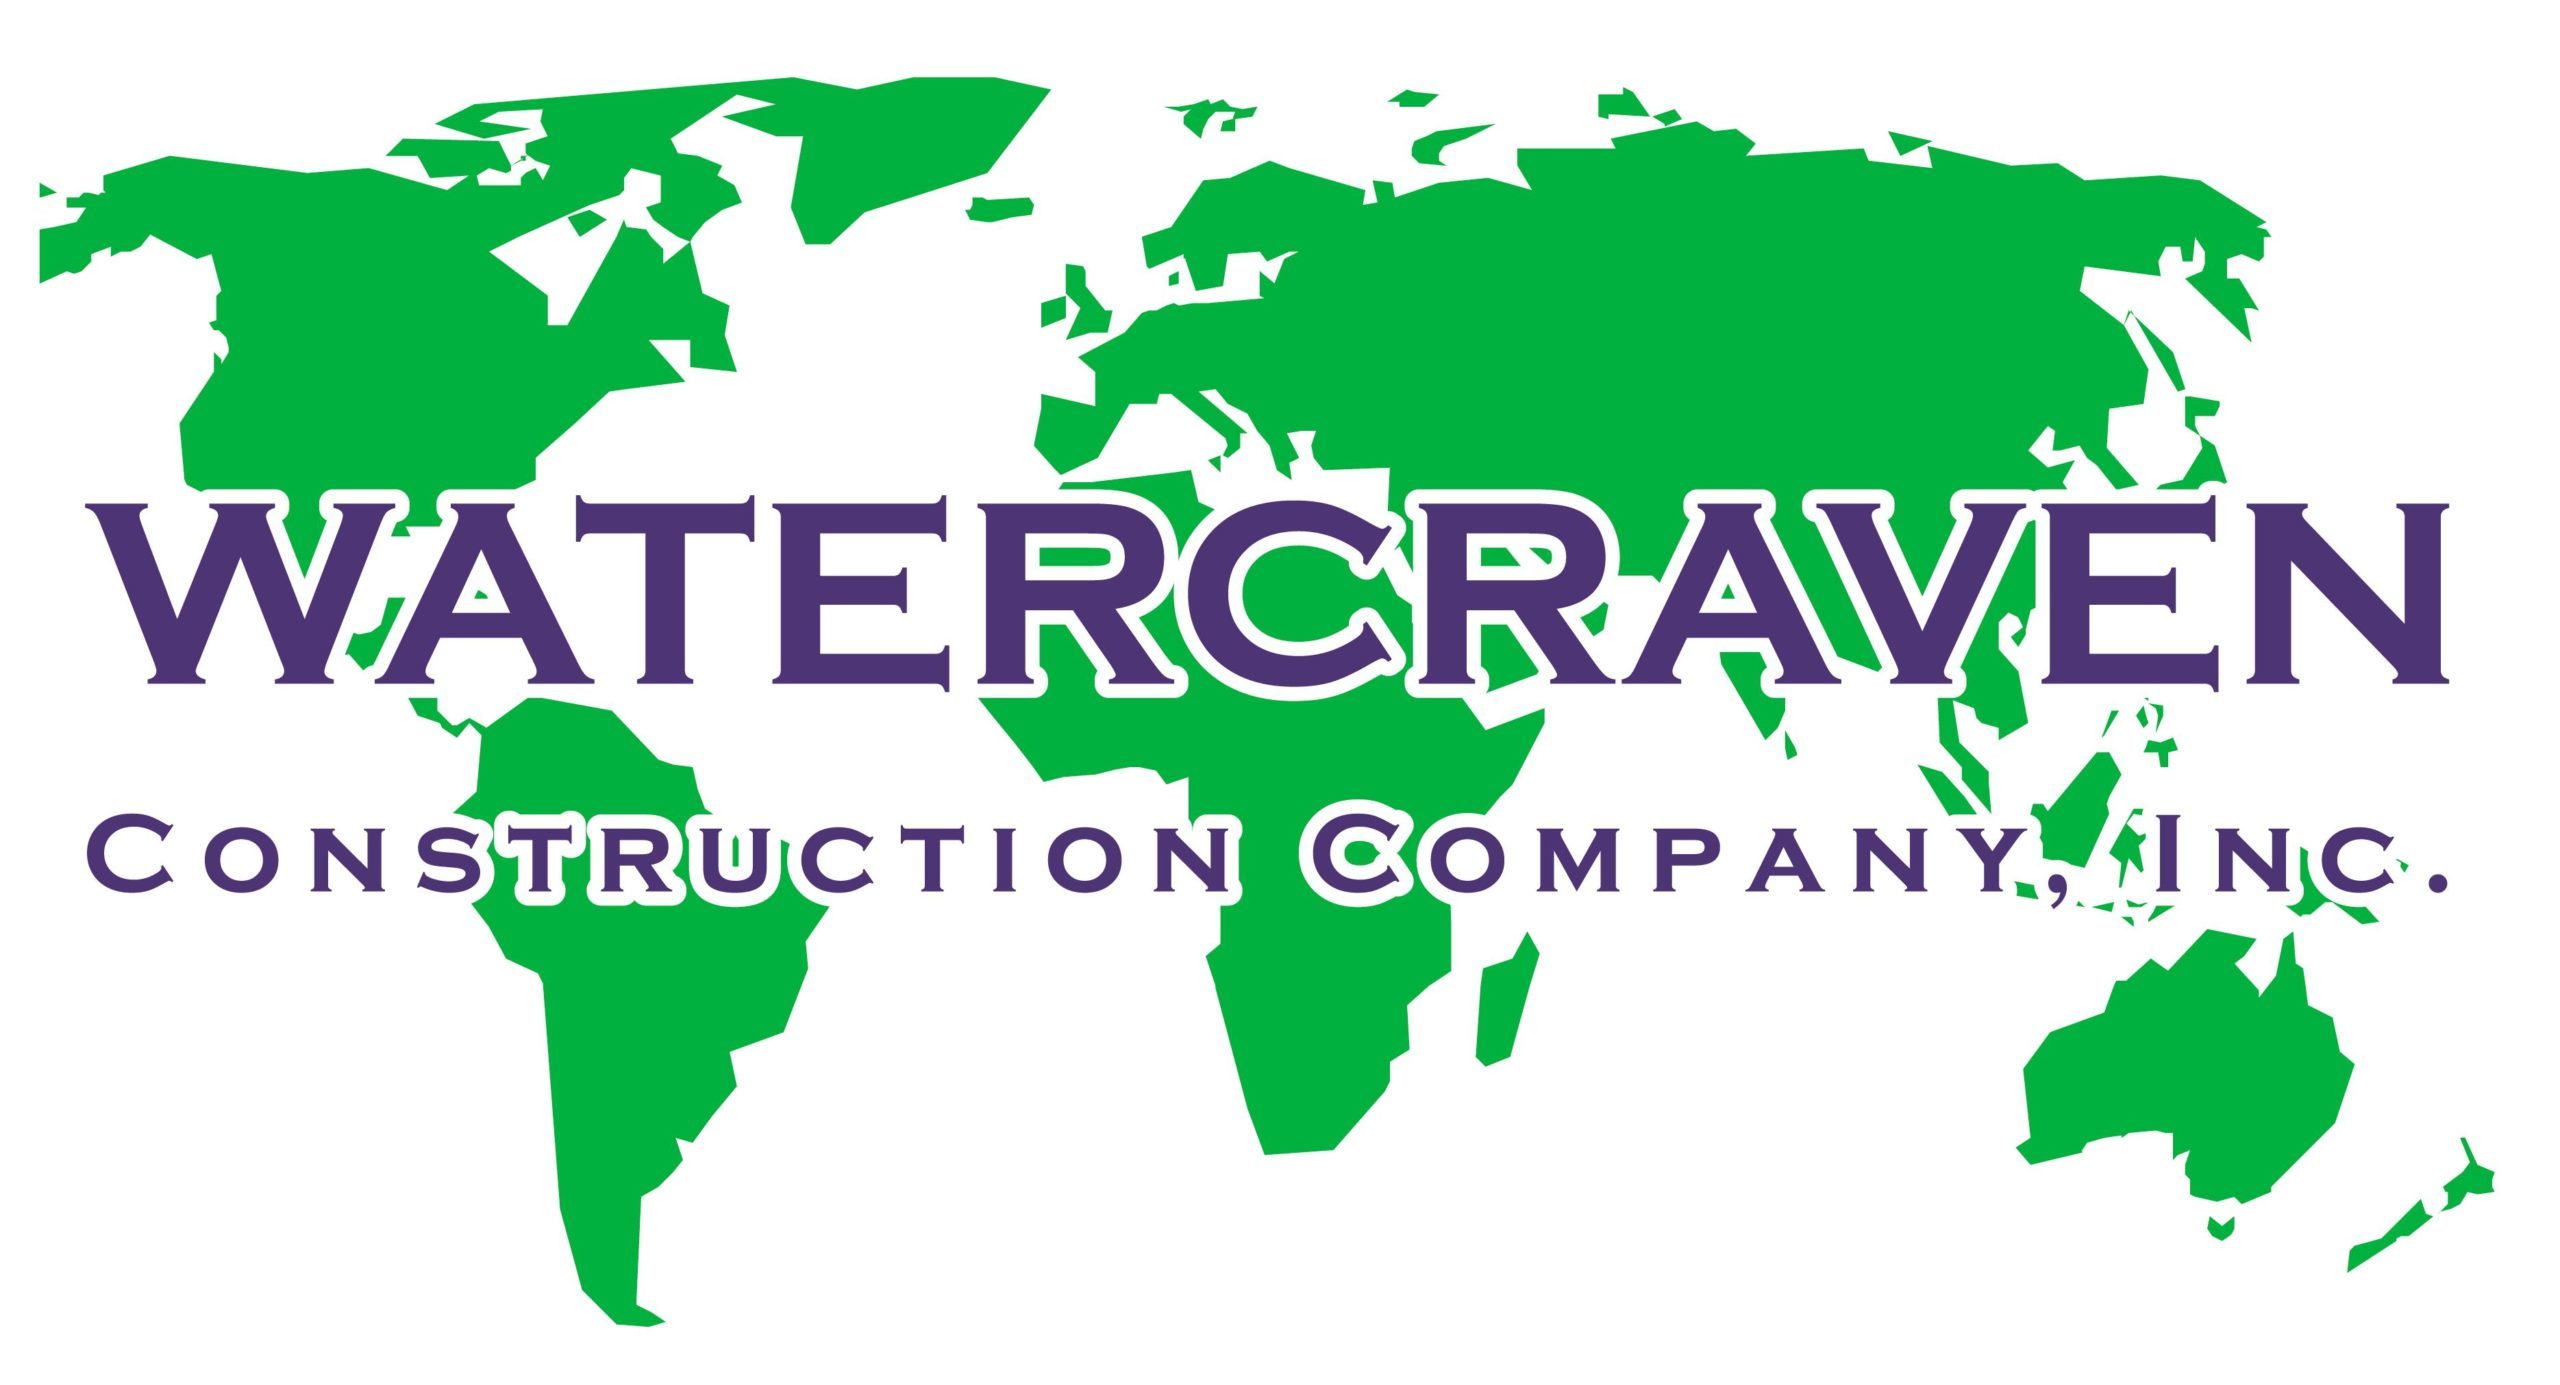 Watercraven Construction Company